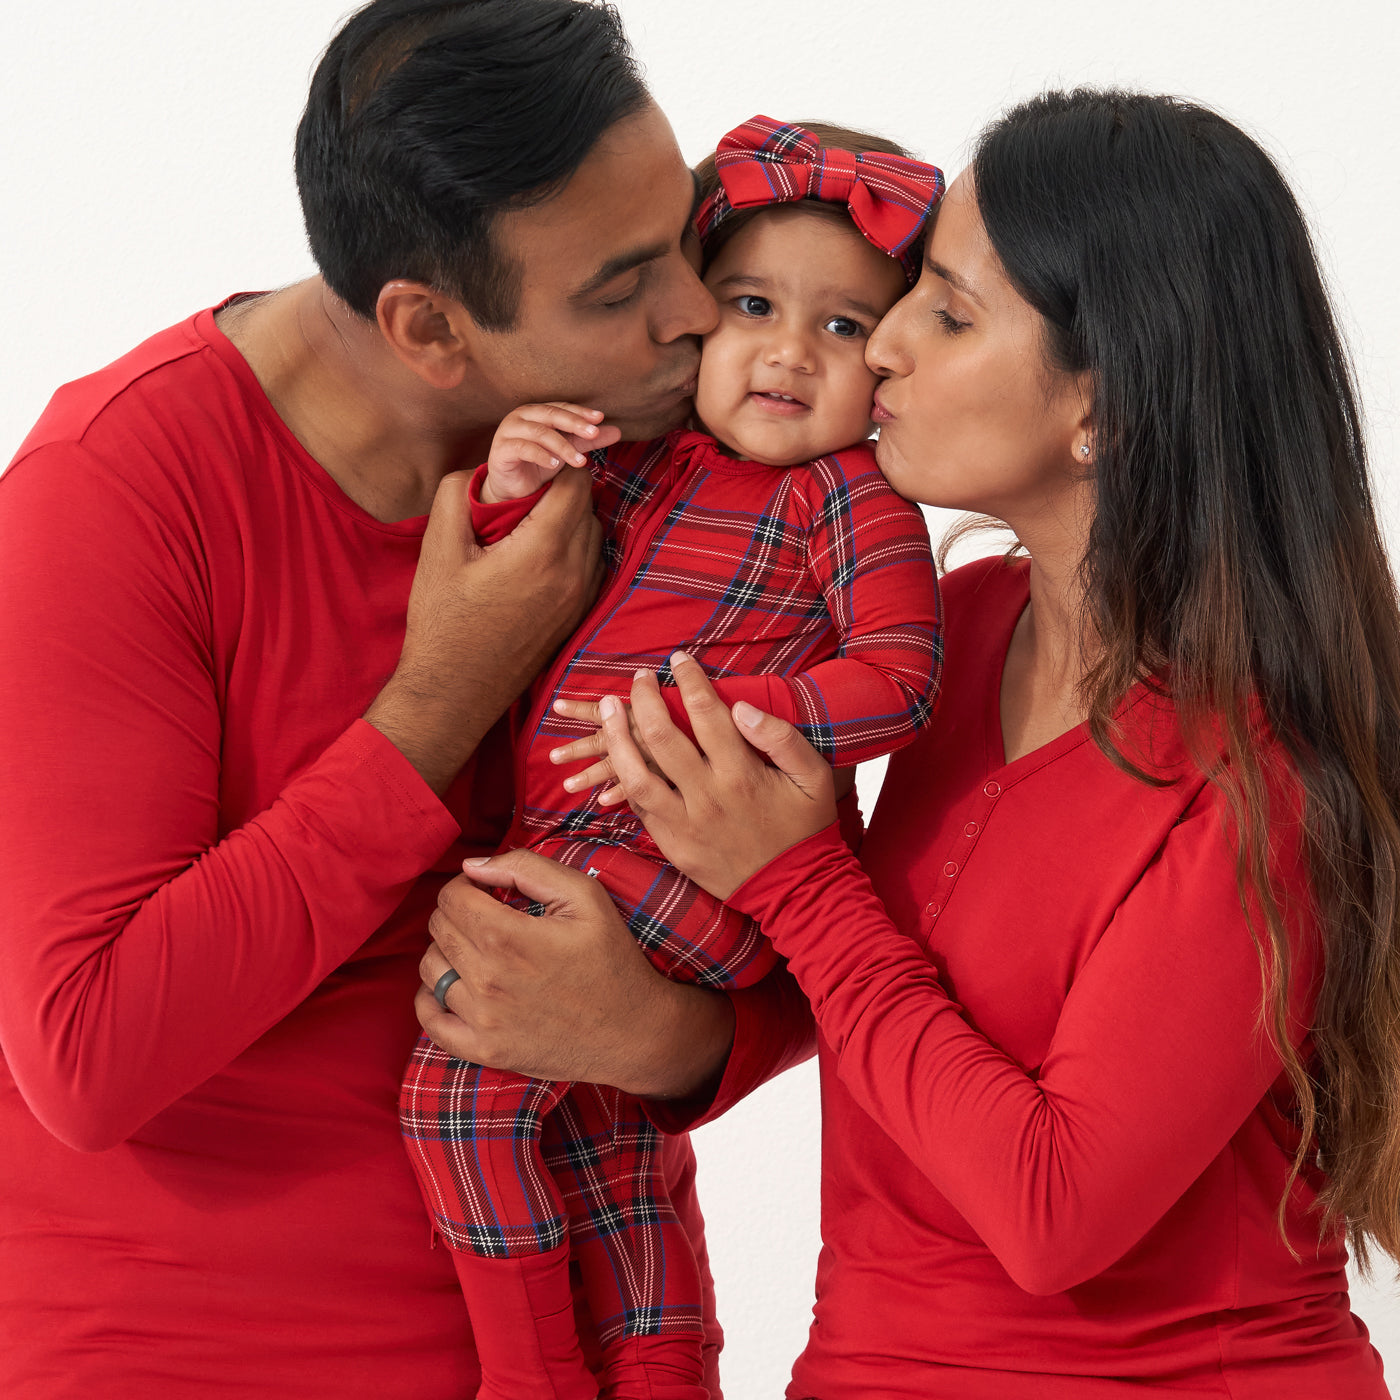 Men's LS PJ Tops - Holiday Red Men's Pajama Top